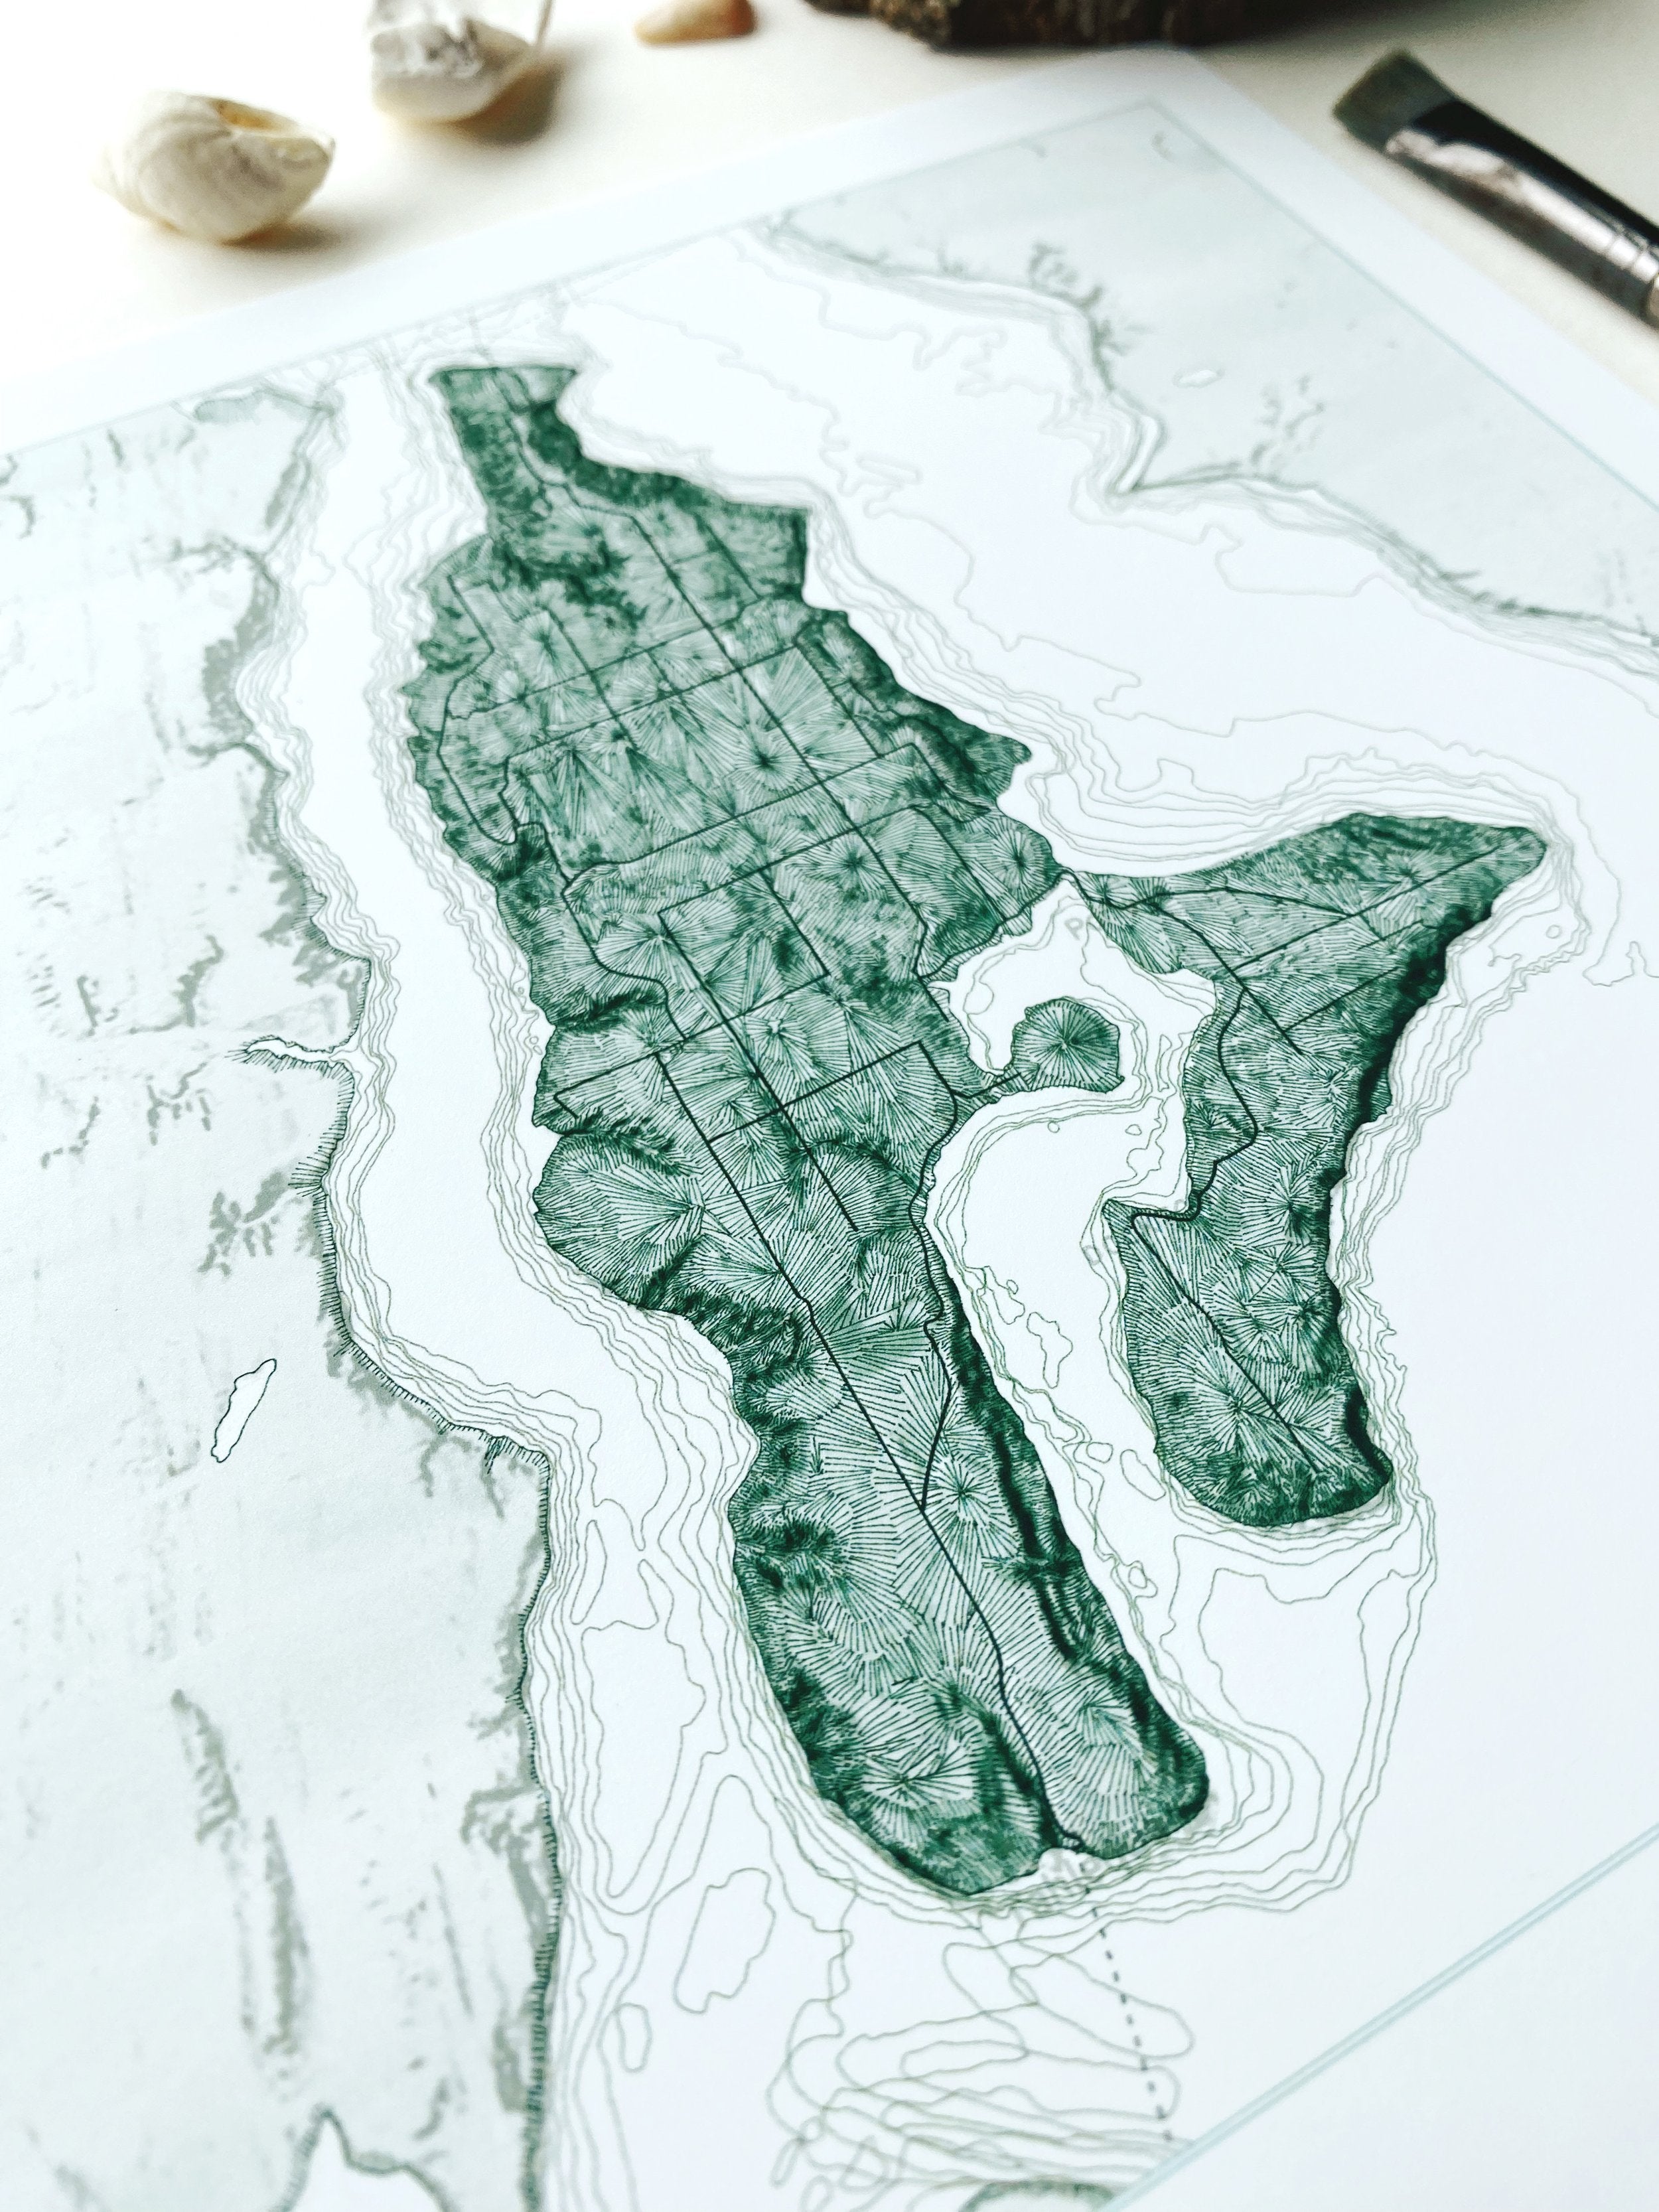 VASHON Land + Water Map Drawing: PRINT